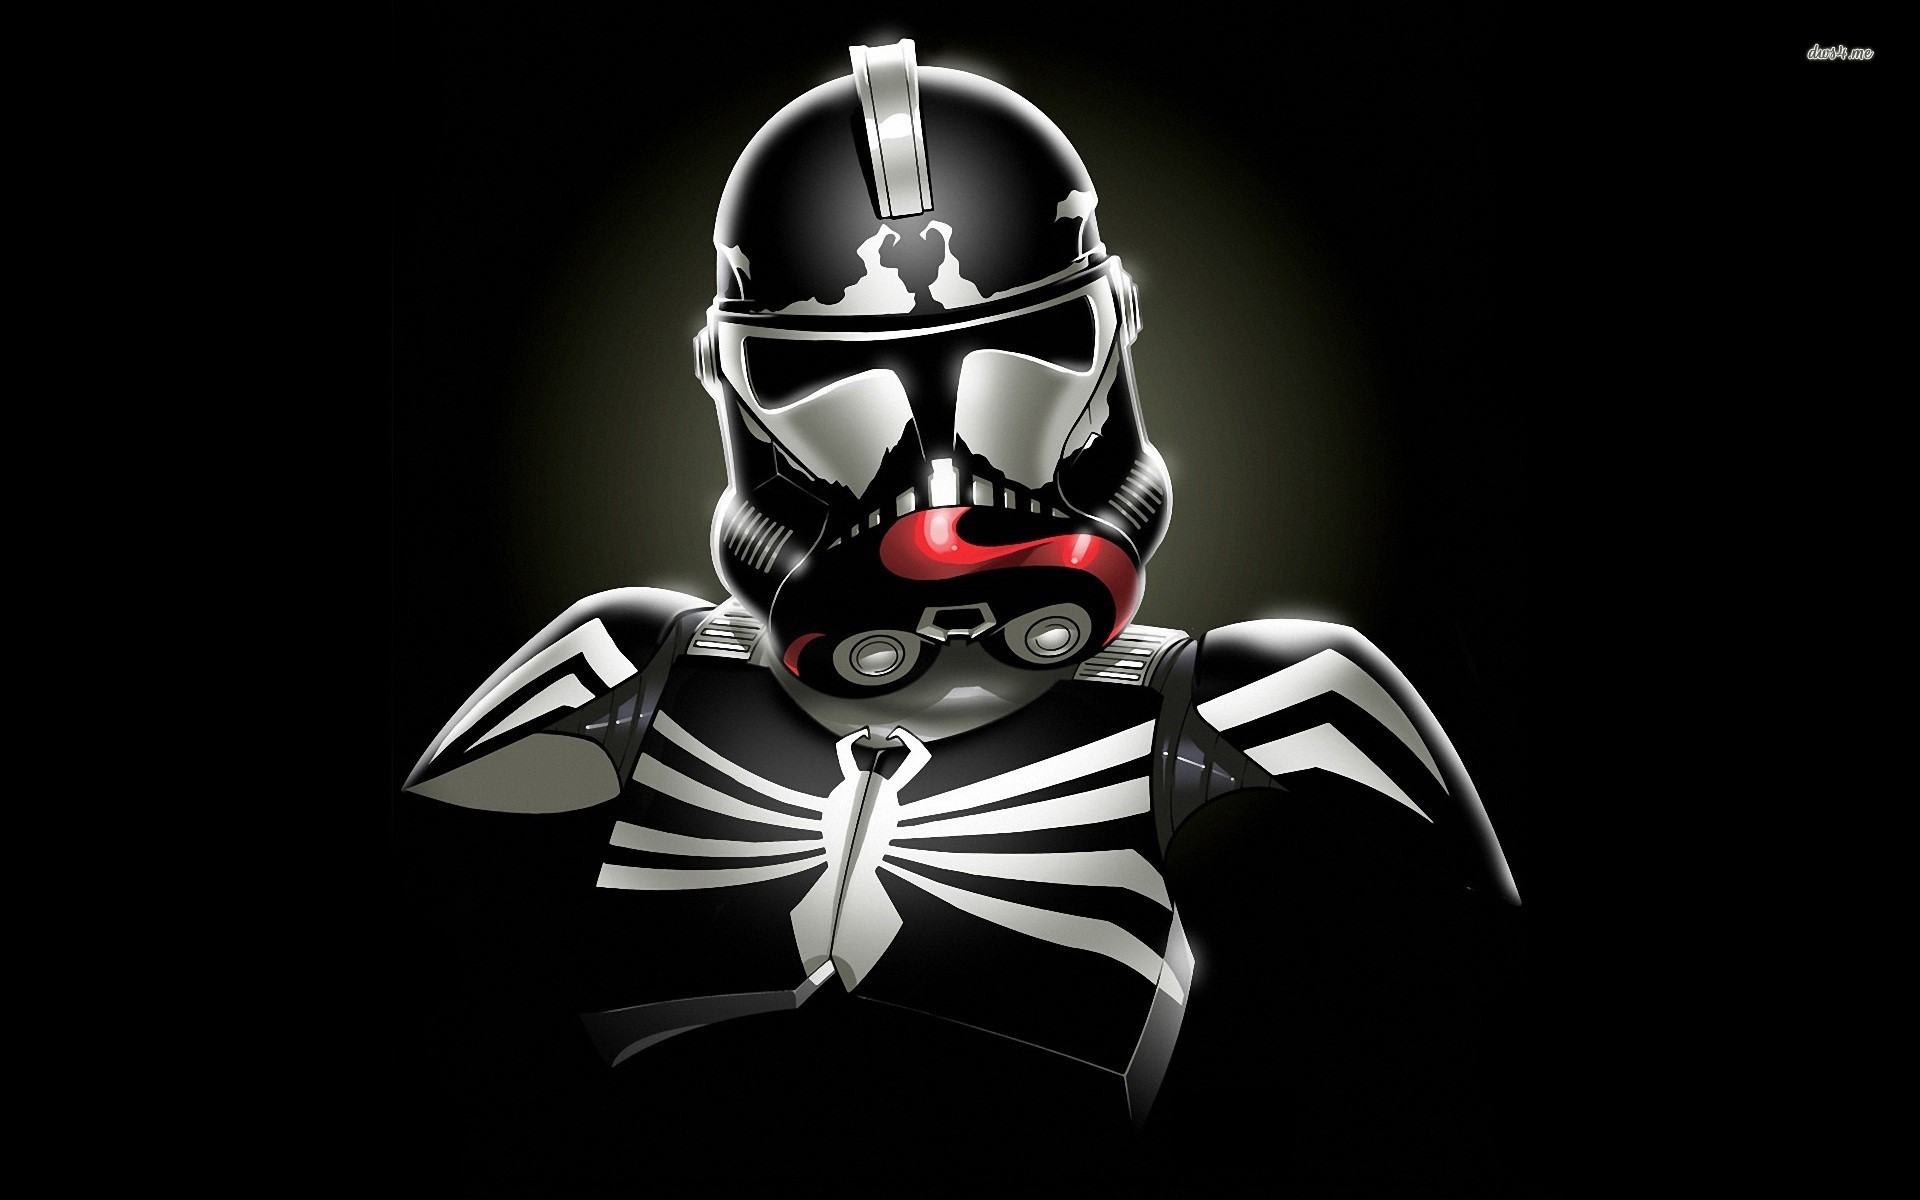 stormtrooper wallpaper,fictional character,illustration,supervillain,graphic design,helmet